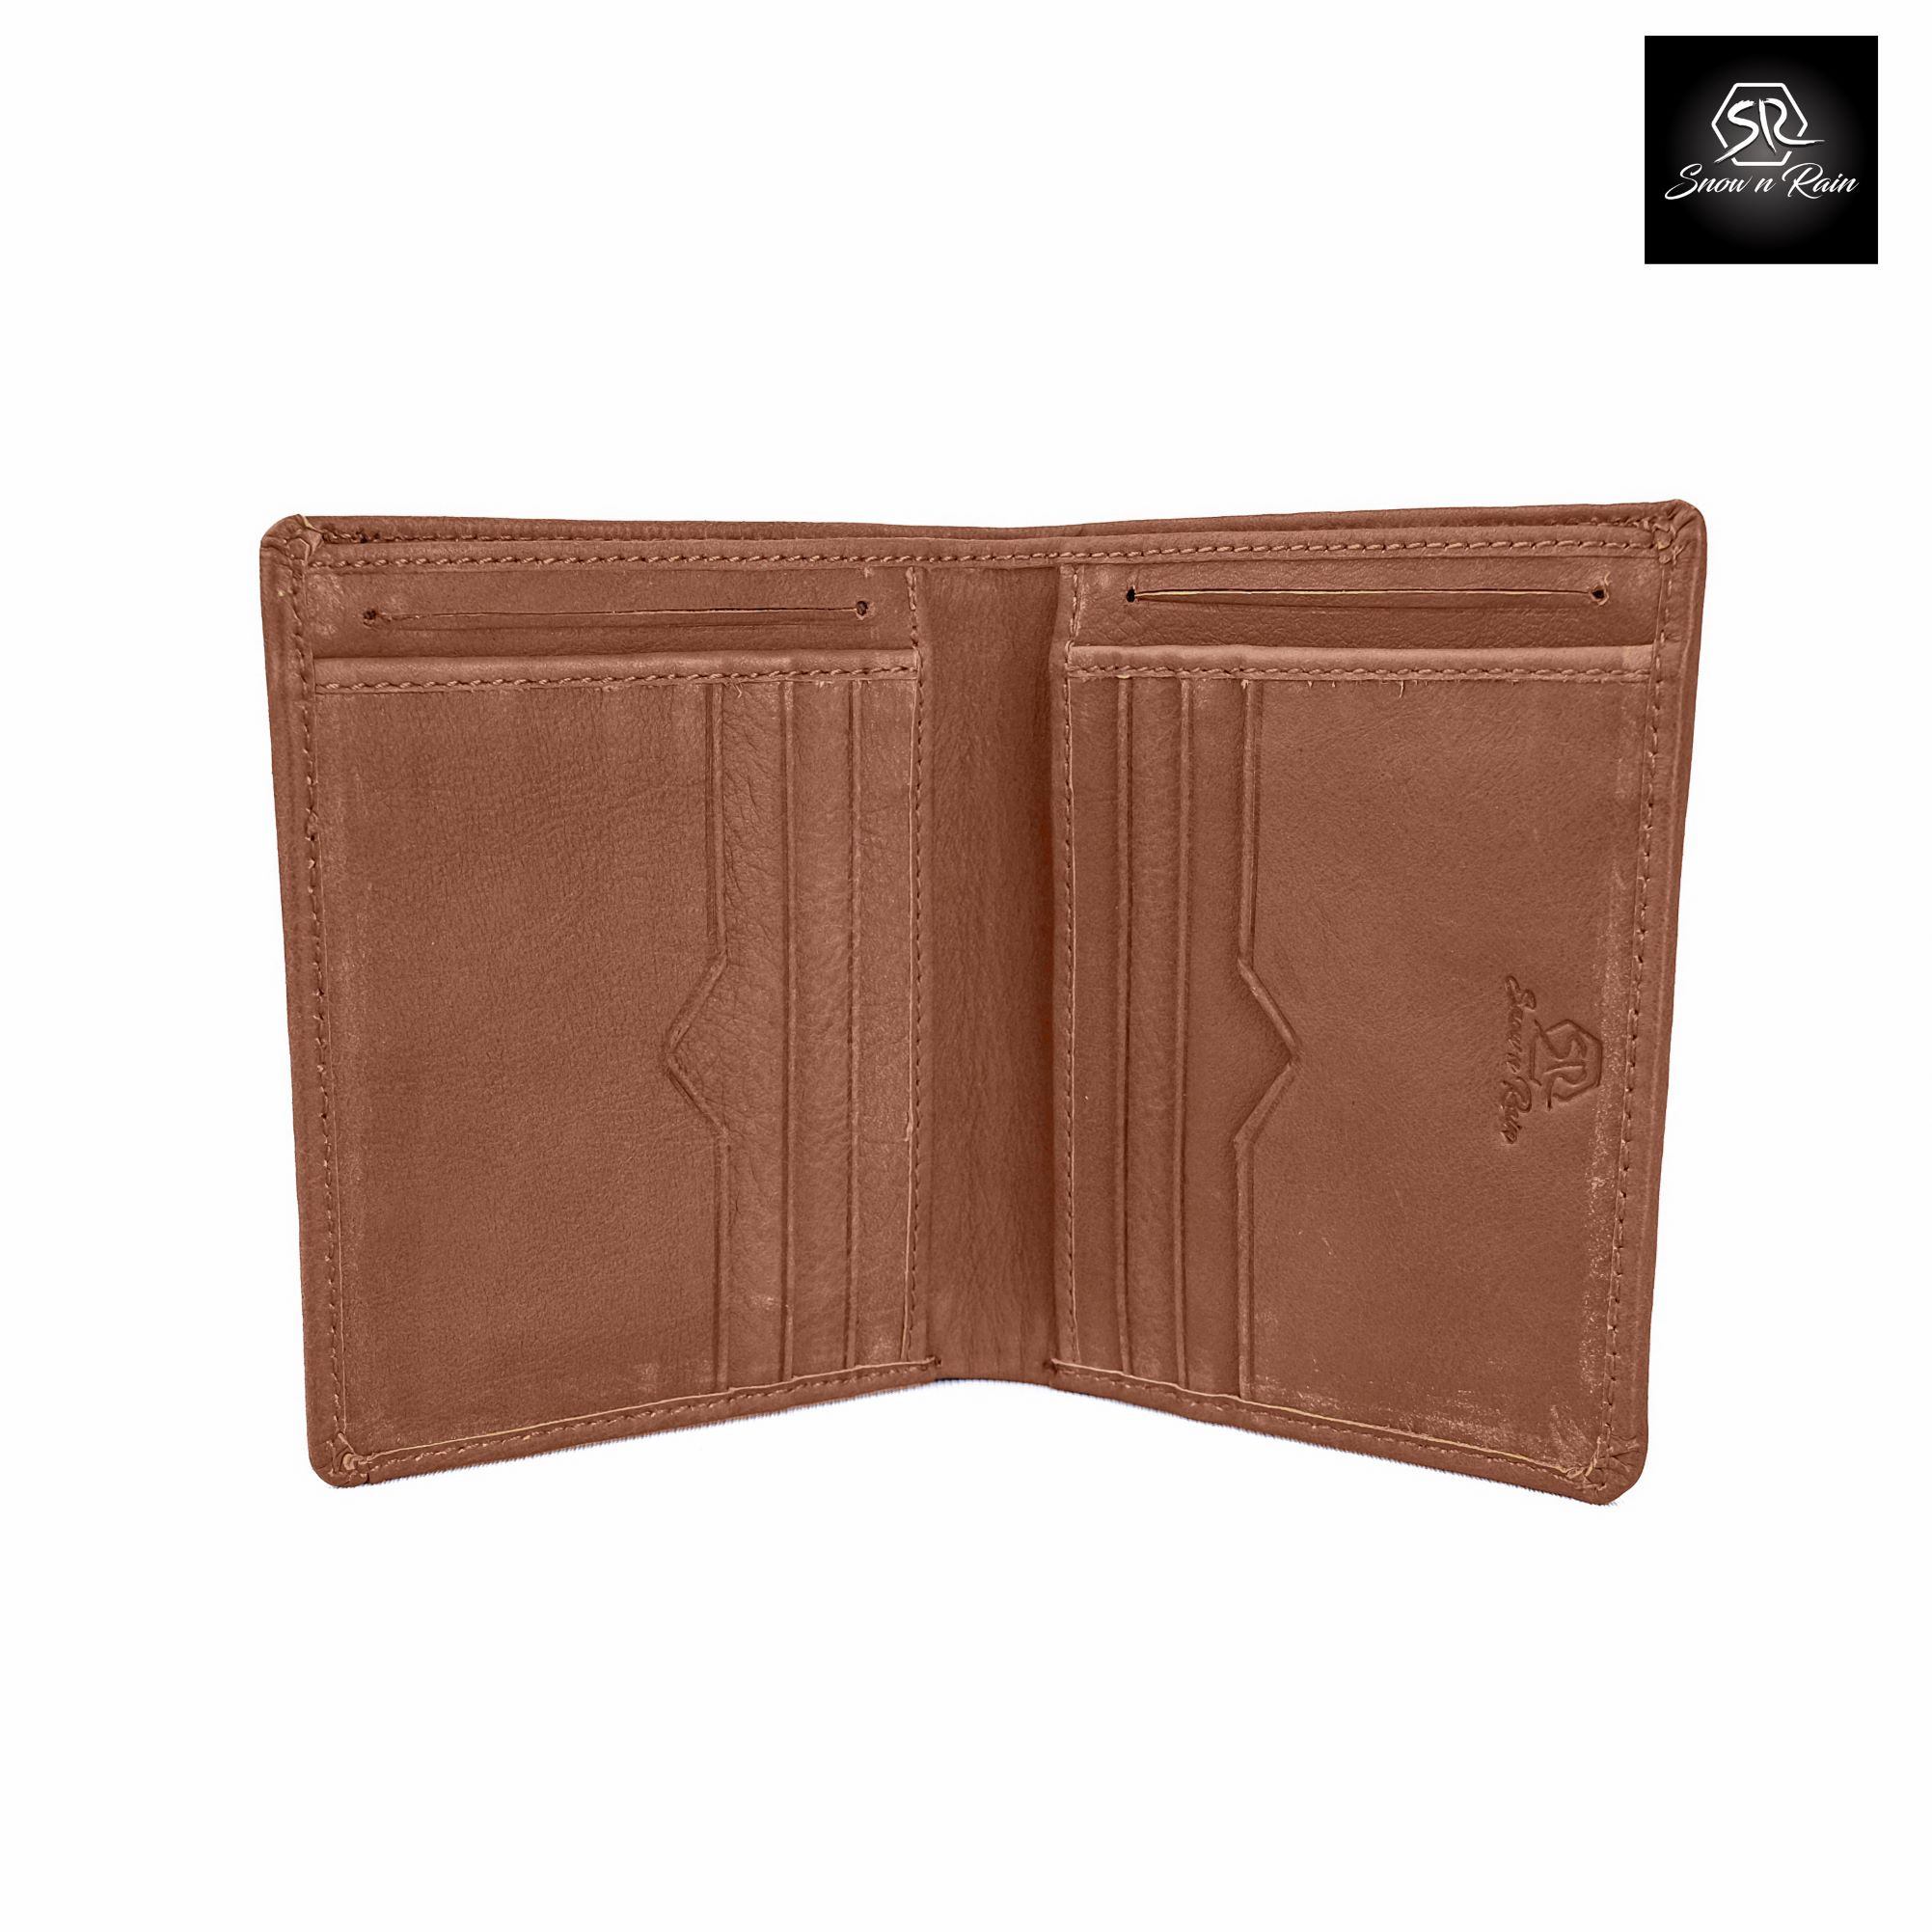 Leather Man wallet Premium Quality